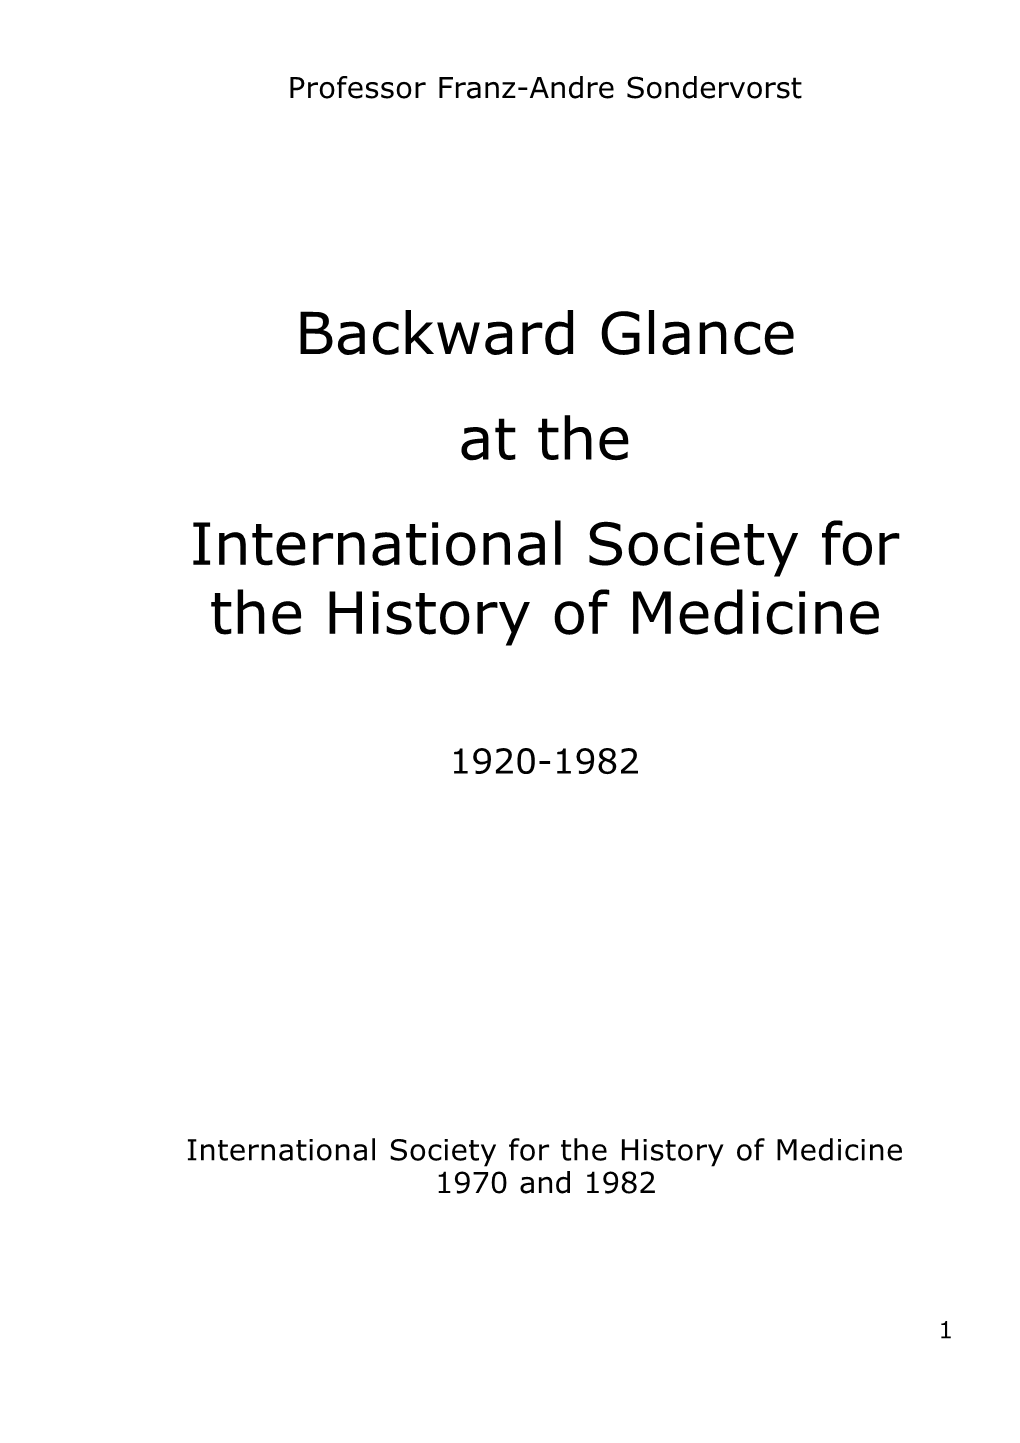 Backward Glance at the International Society for the History of Medicine